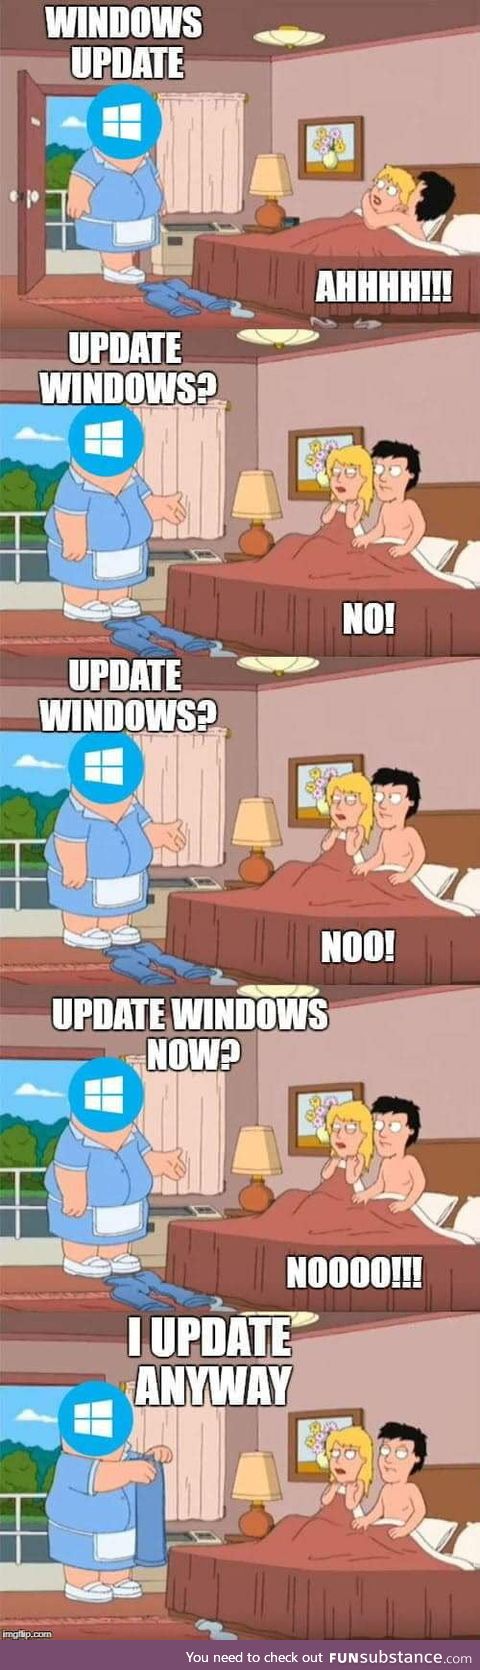 Windows update be like